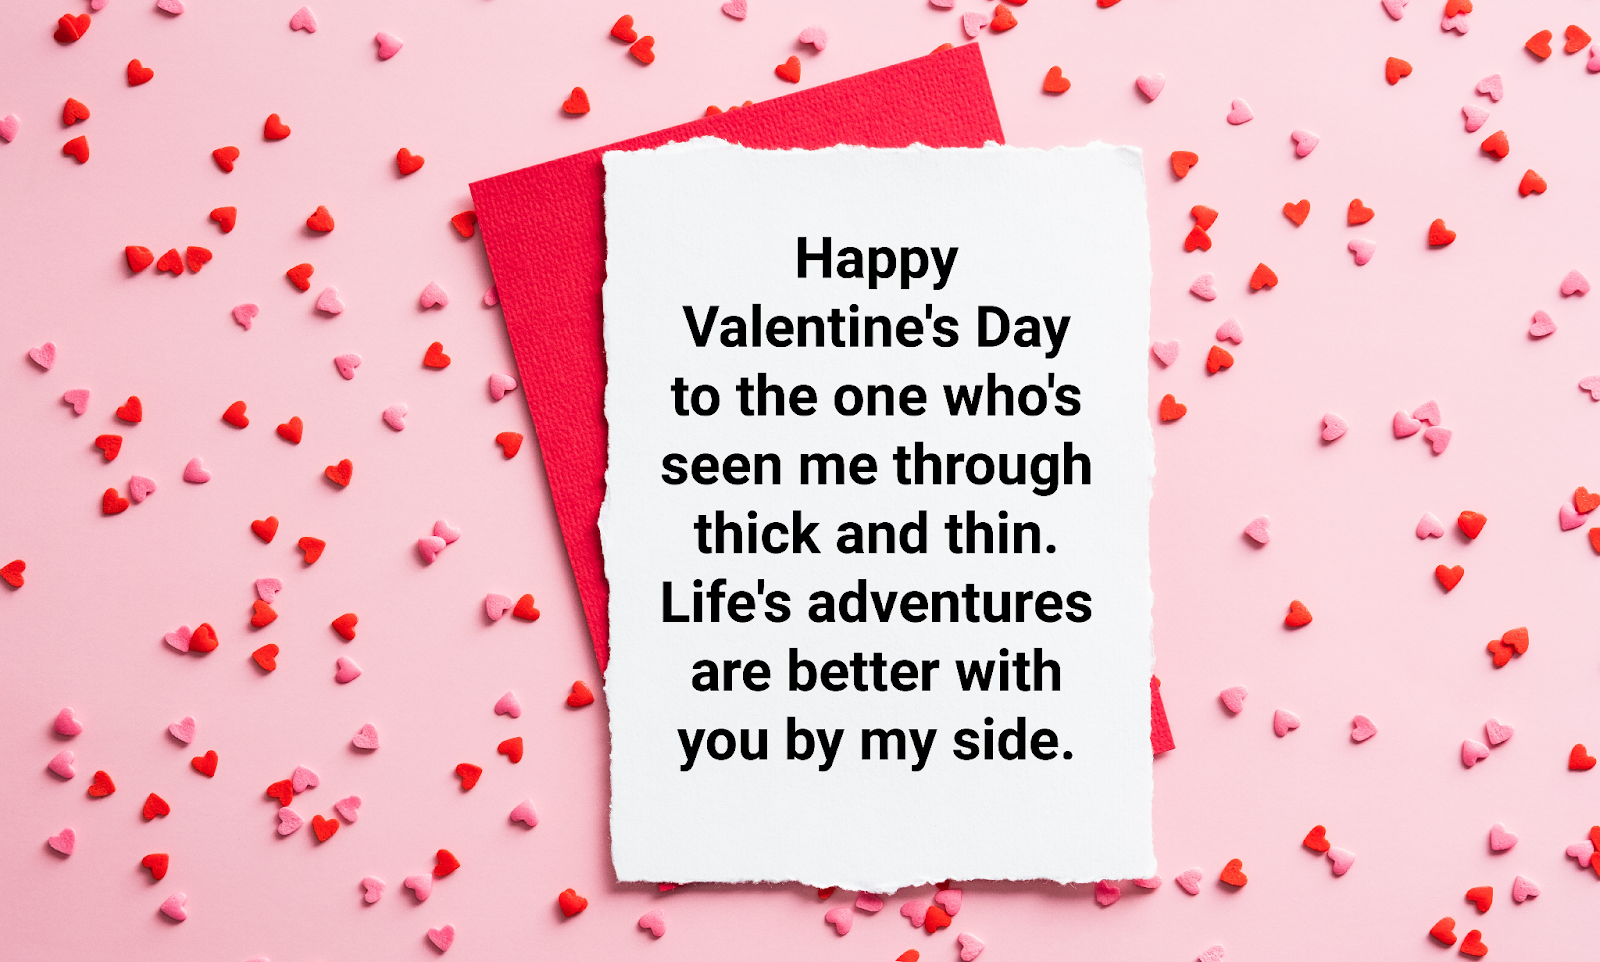 Valentine’s Day message for friend